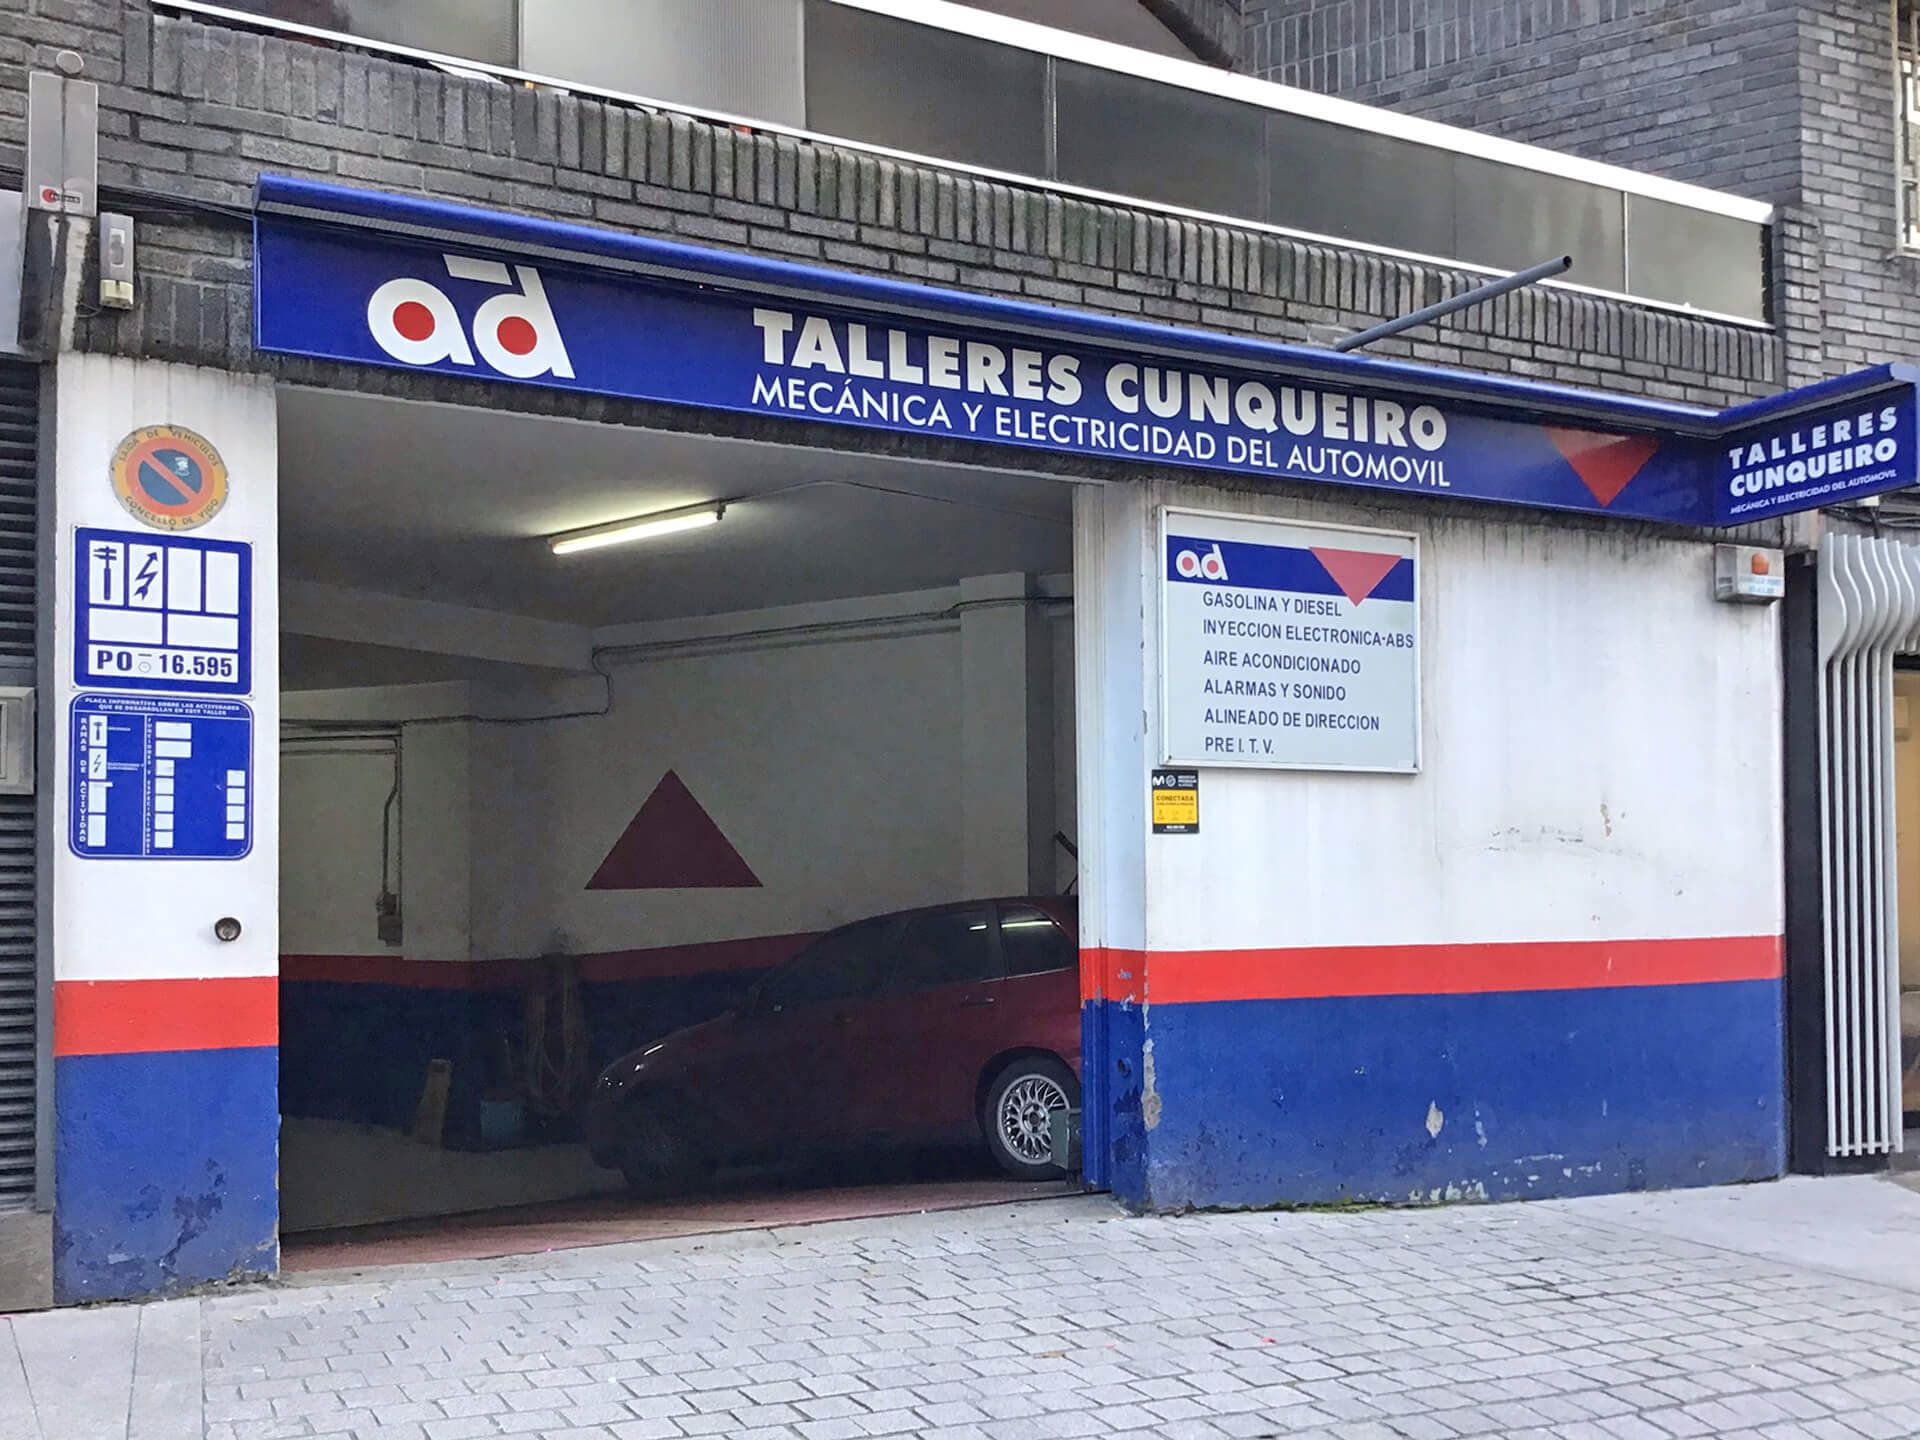 Su taller de coches de confianza en Vigo